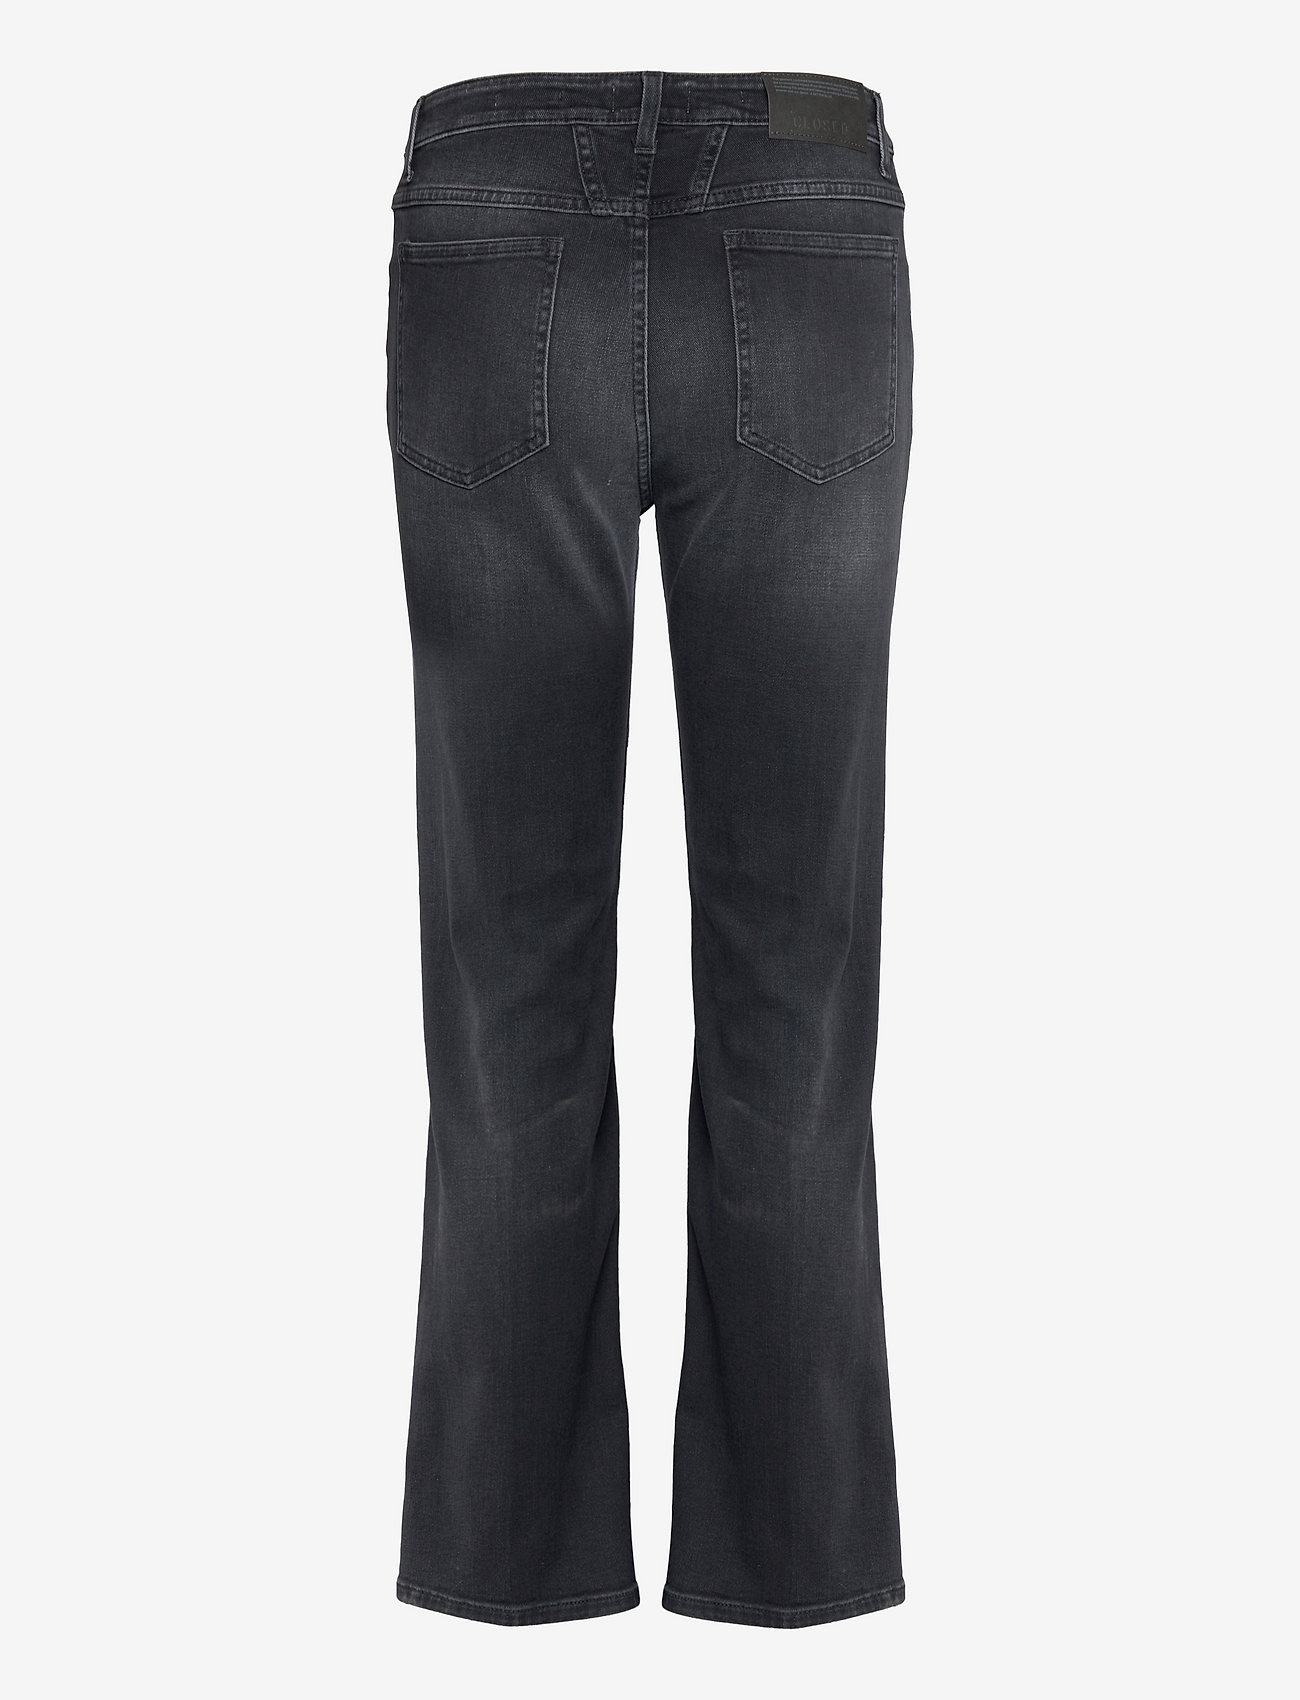 Closed - womens pant - jeans droites - dark grey - 2